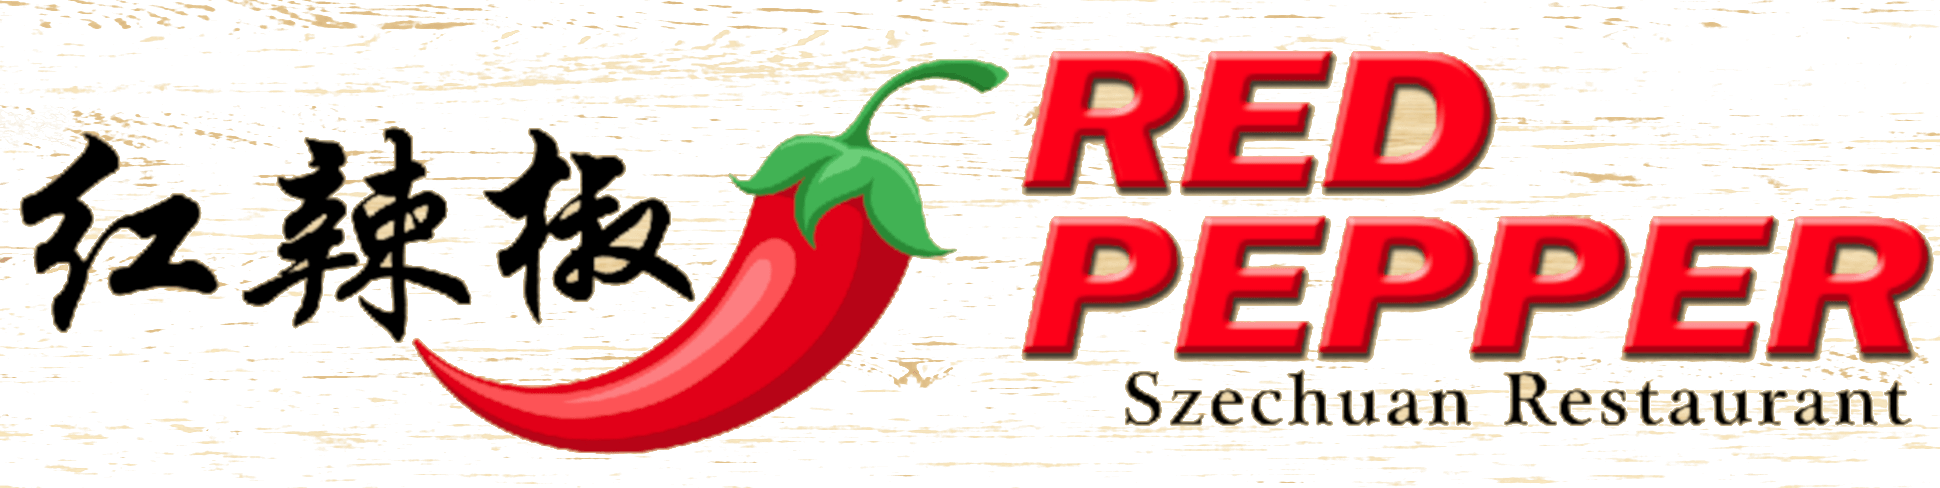 Red Pepper Restaurant Logo - Red Pepper – Szechuan Restaurant